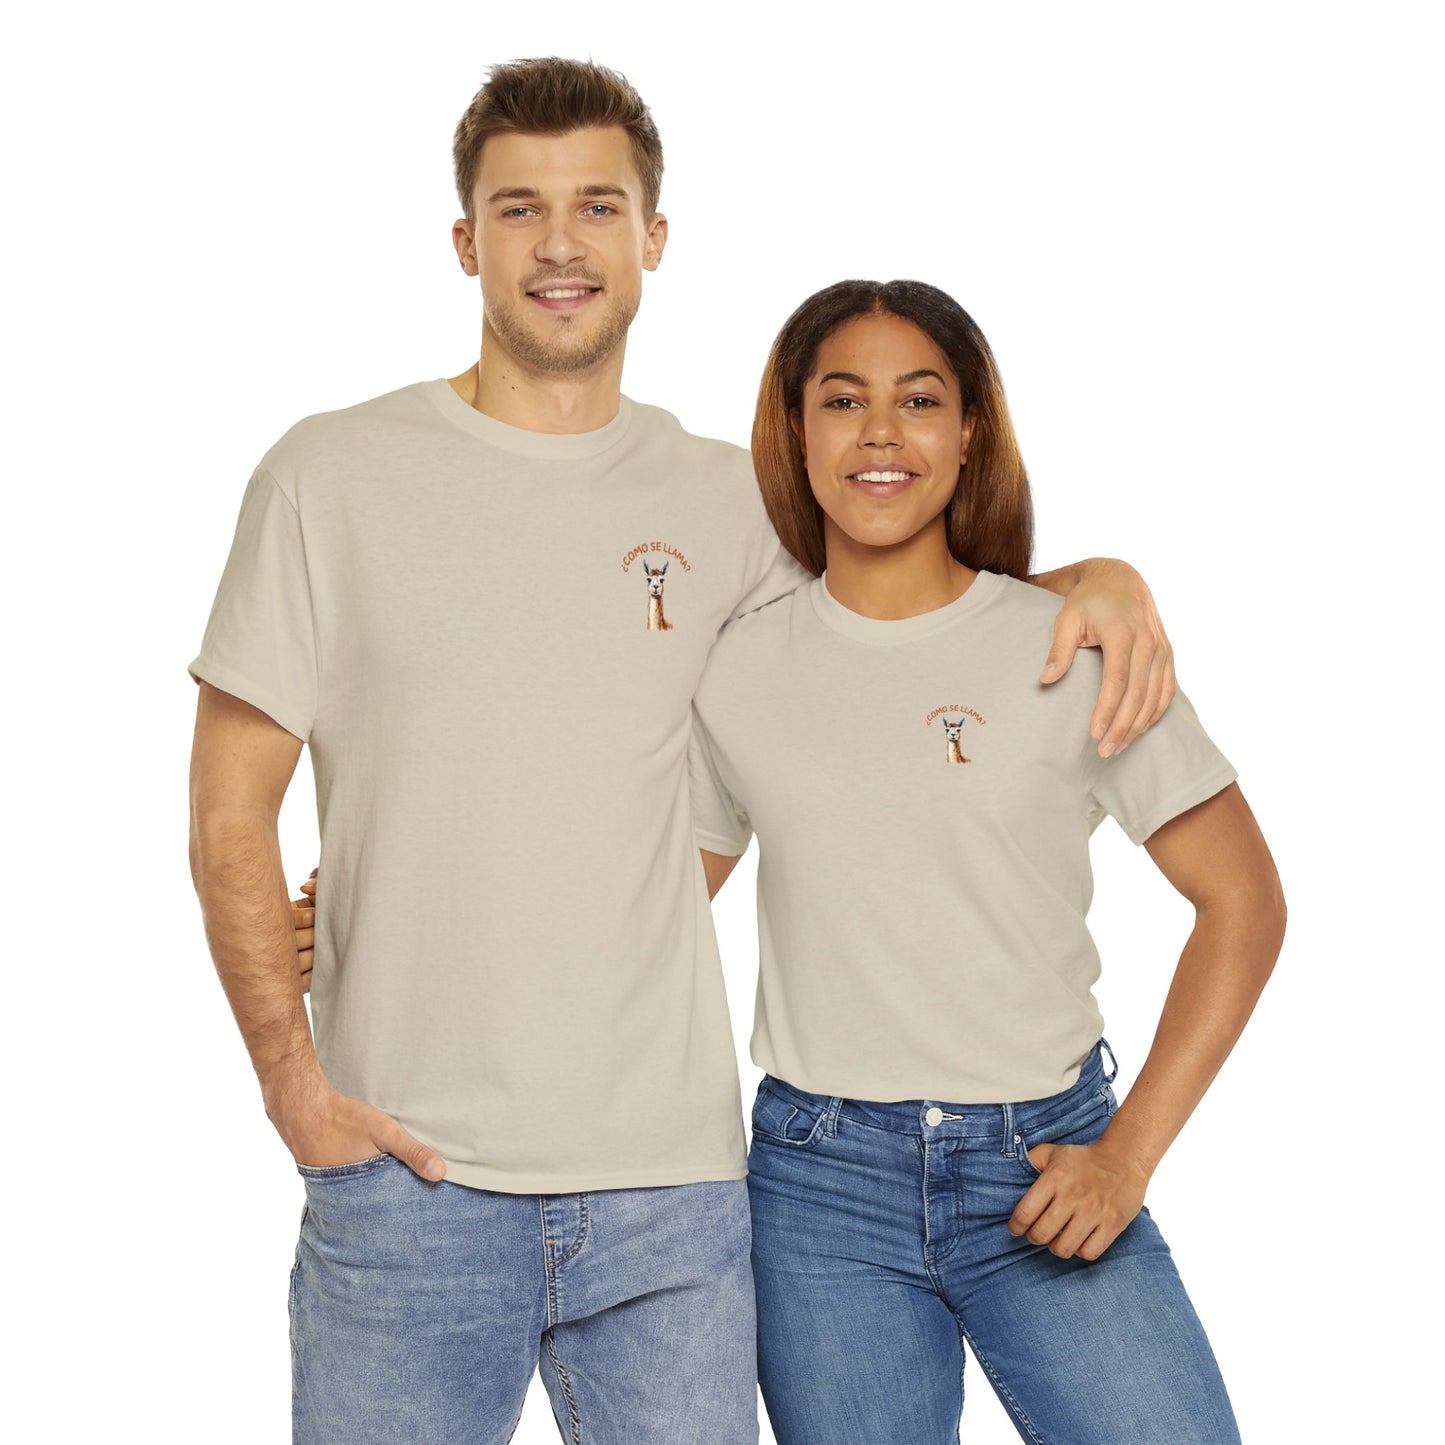 Como se llama - Unisex T-Shirt